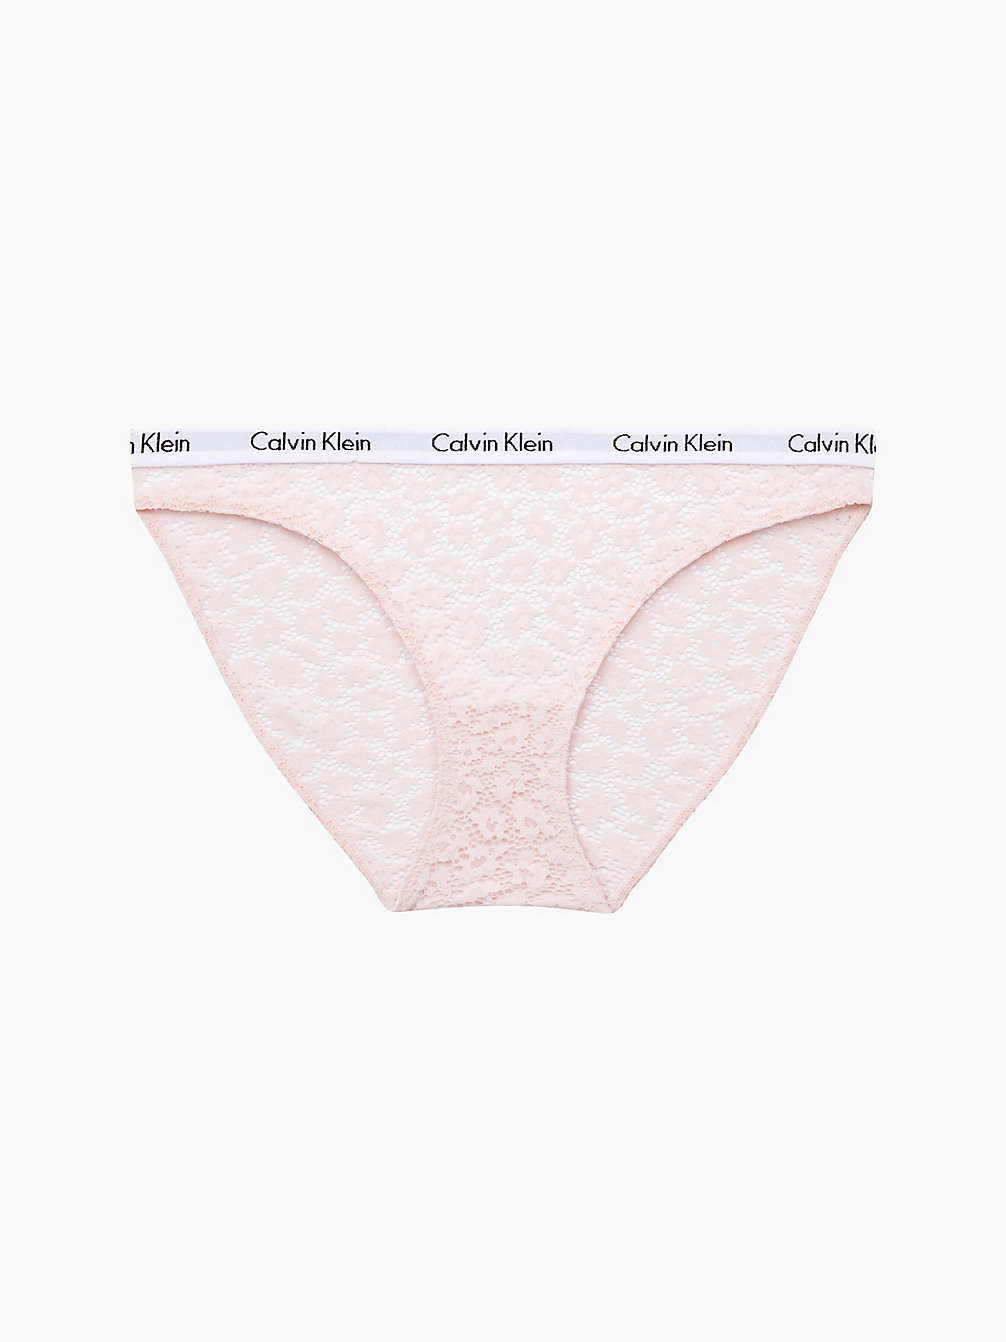 NYMPHS THIGH Slip Bikini - Carousel undefined donna Calvin Klein